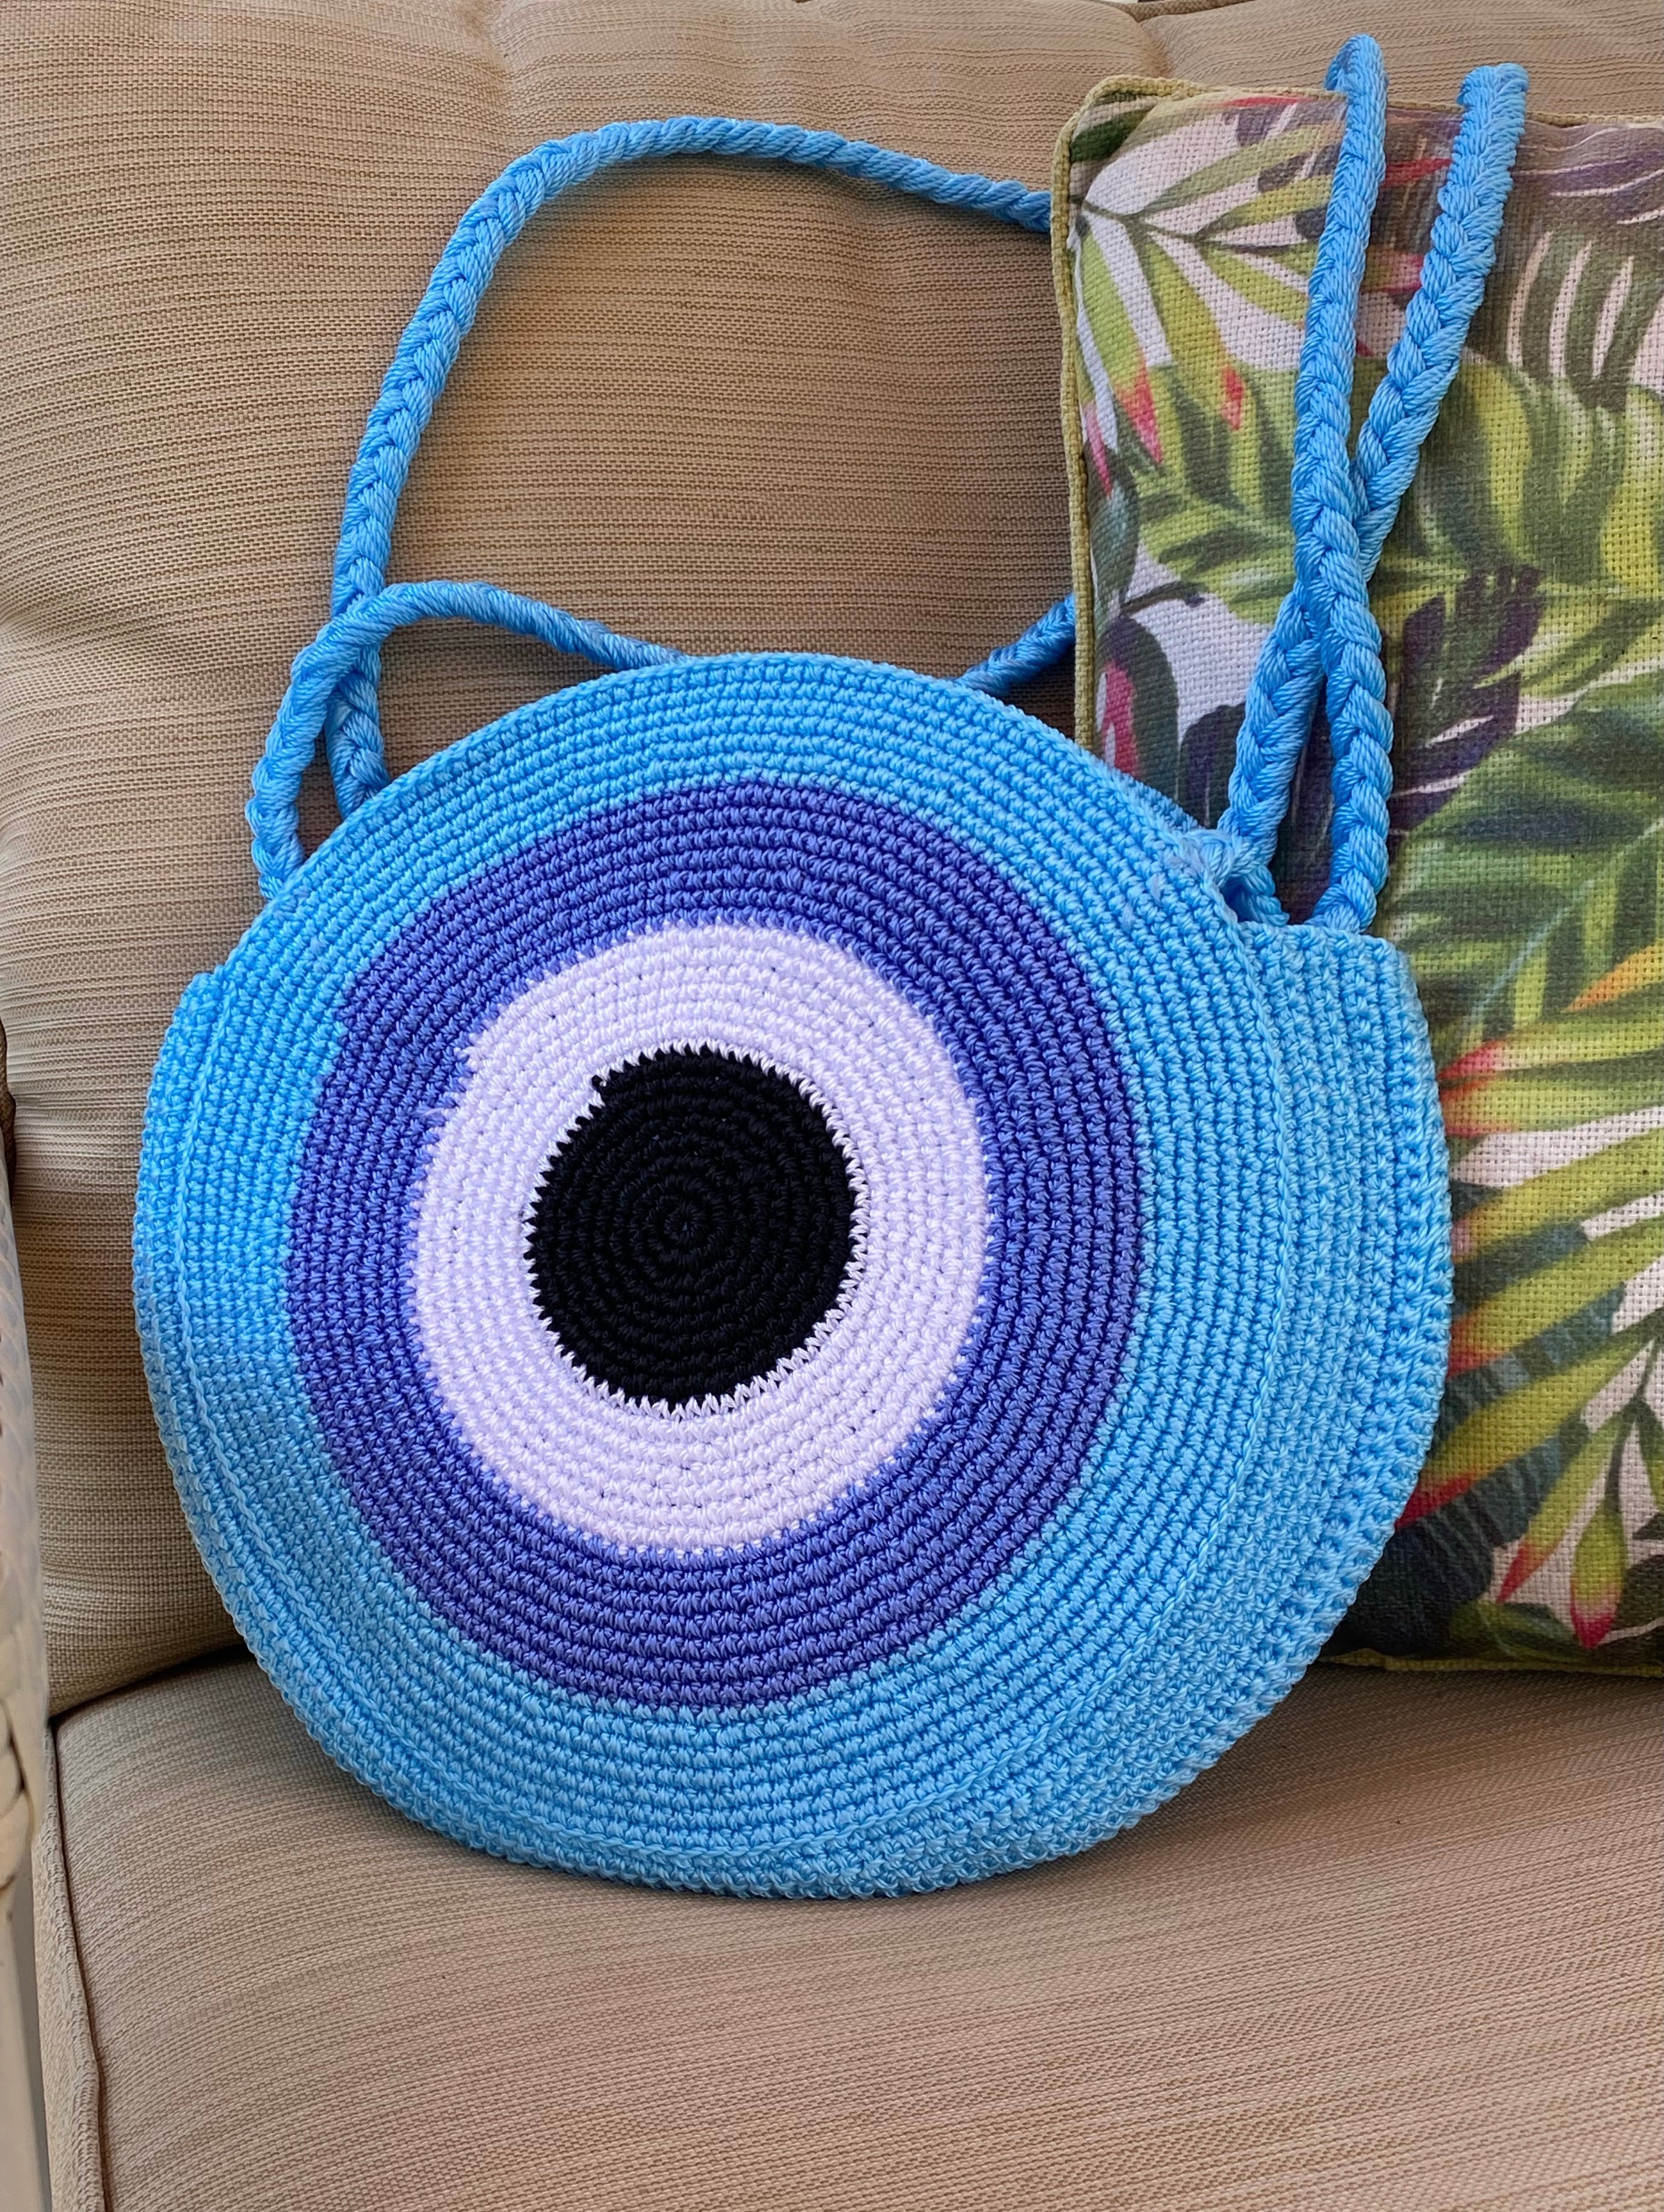 Buy I.F.H Crochet Bag - Reel Time Crossbody Bag - Boho Crochet Bag - Crochet  Circle Bag - Crossbody Bag - Round Crochet Bag at Amazon.in